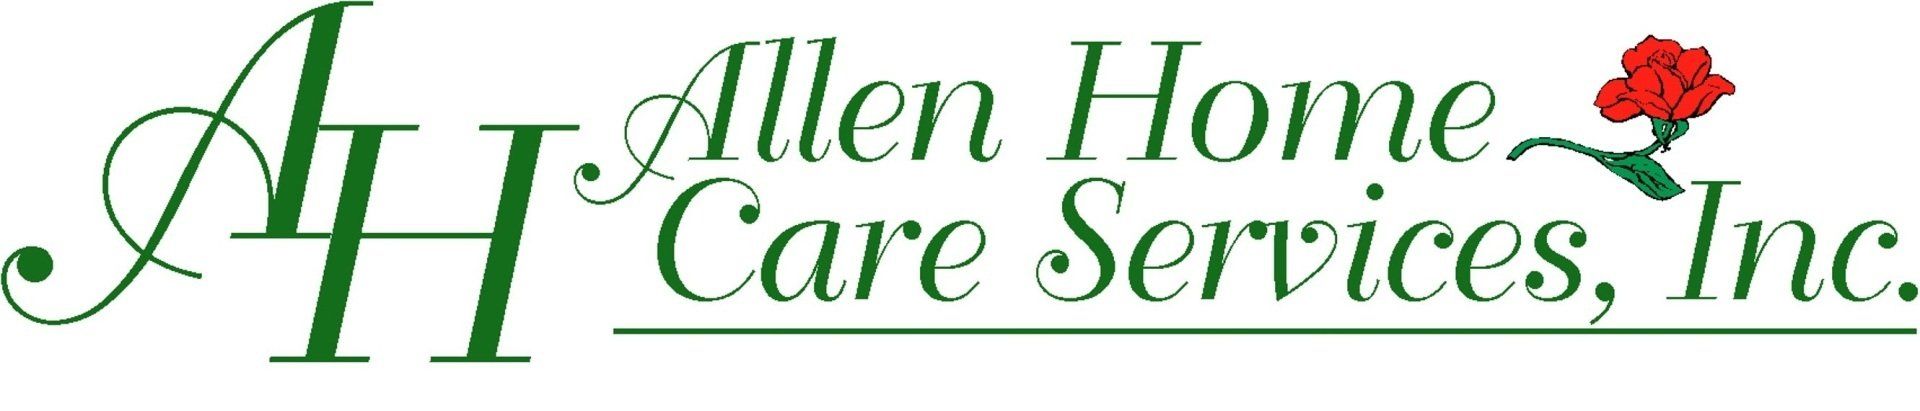 Allen Home Care